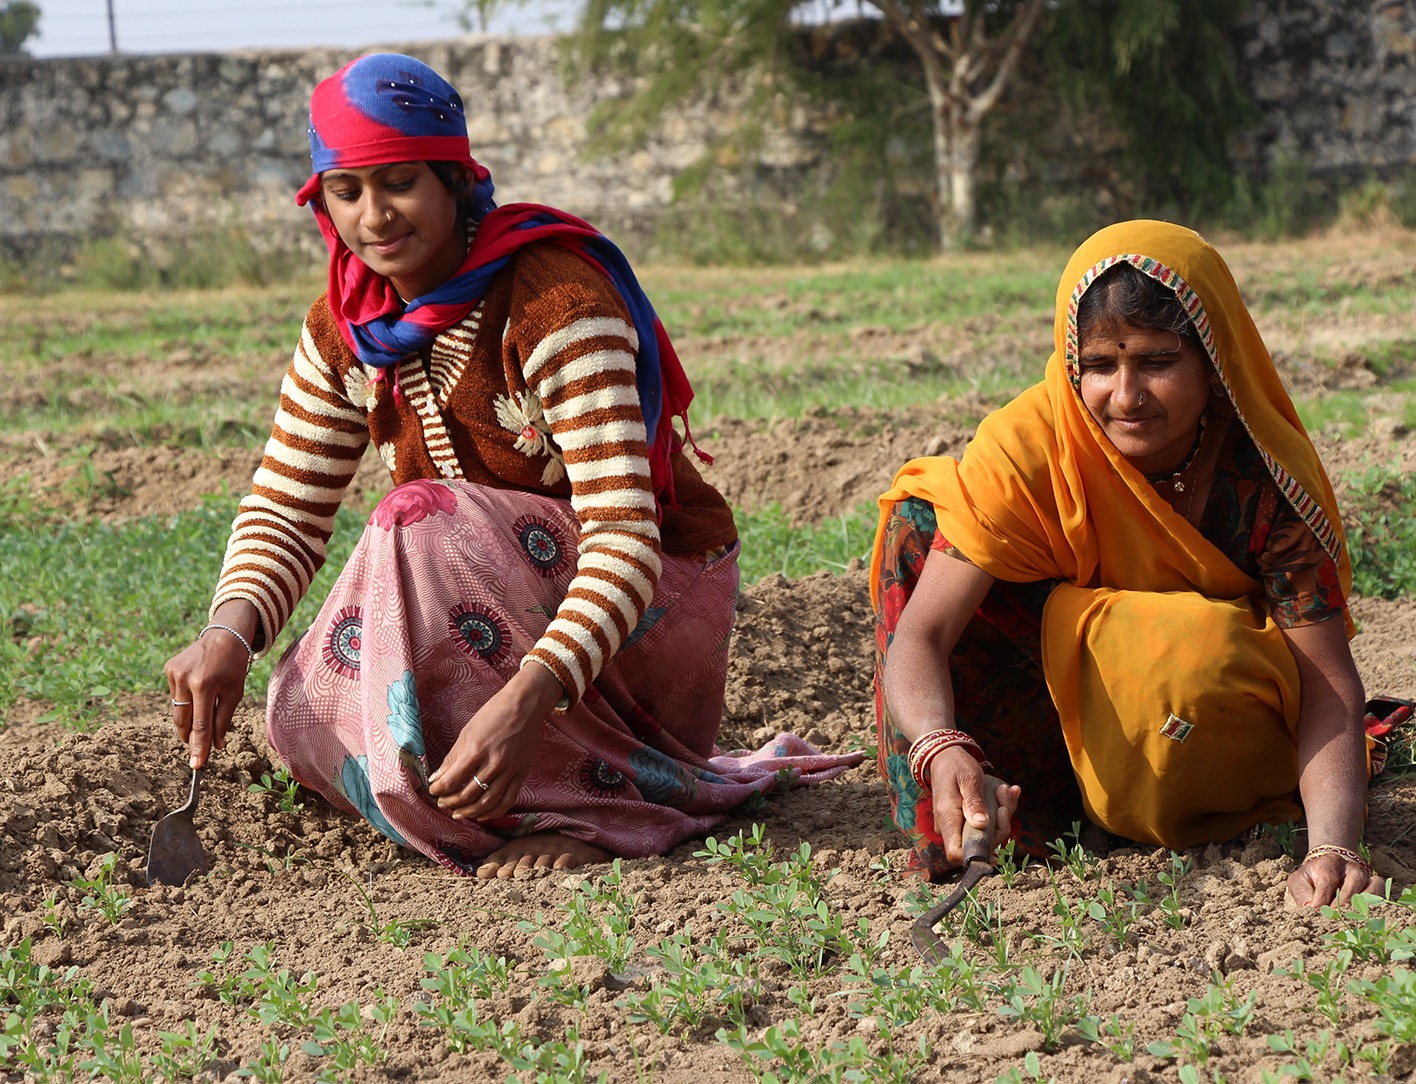 Femmes indiennes accroupies qui cultivent la terre.